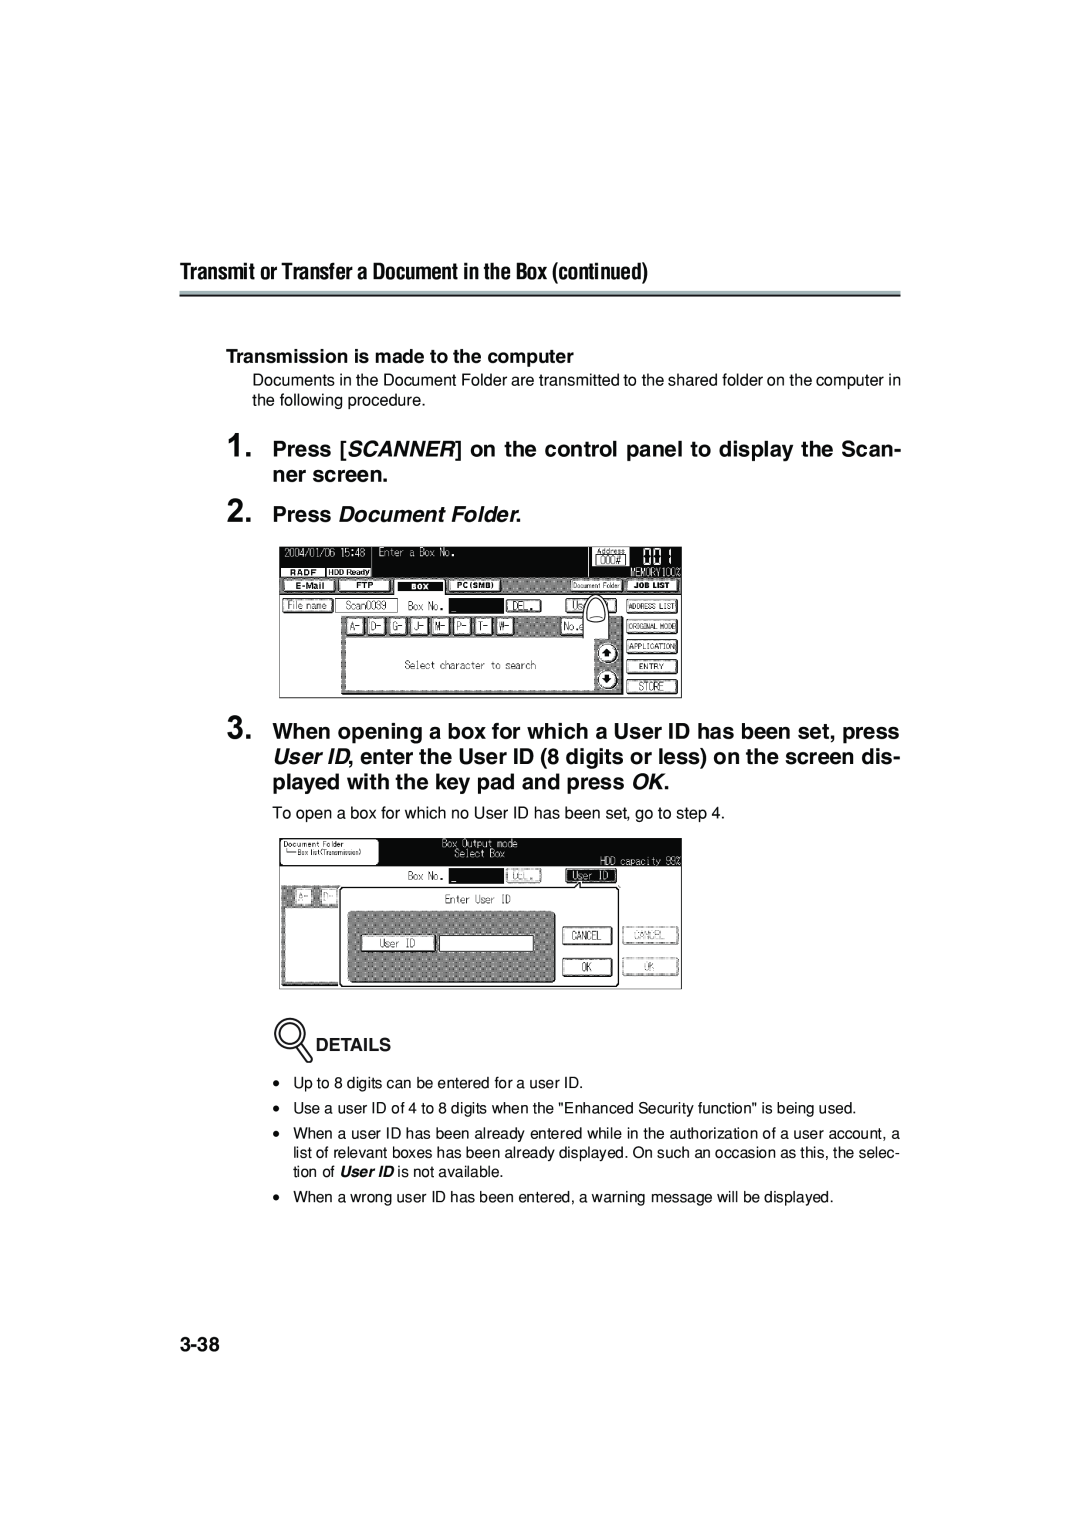 Konica Minolta 7222 manual Transmit or Transfer a Document in the Box continued, Press Document Folder 